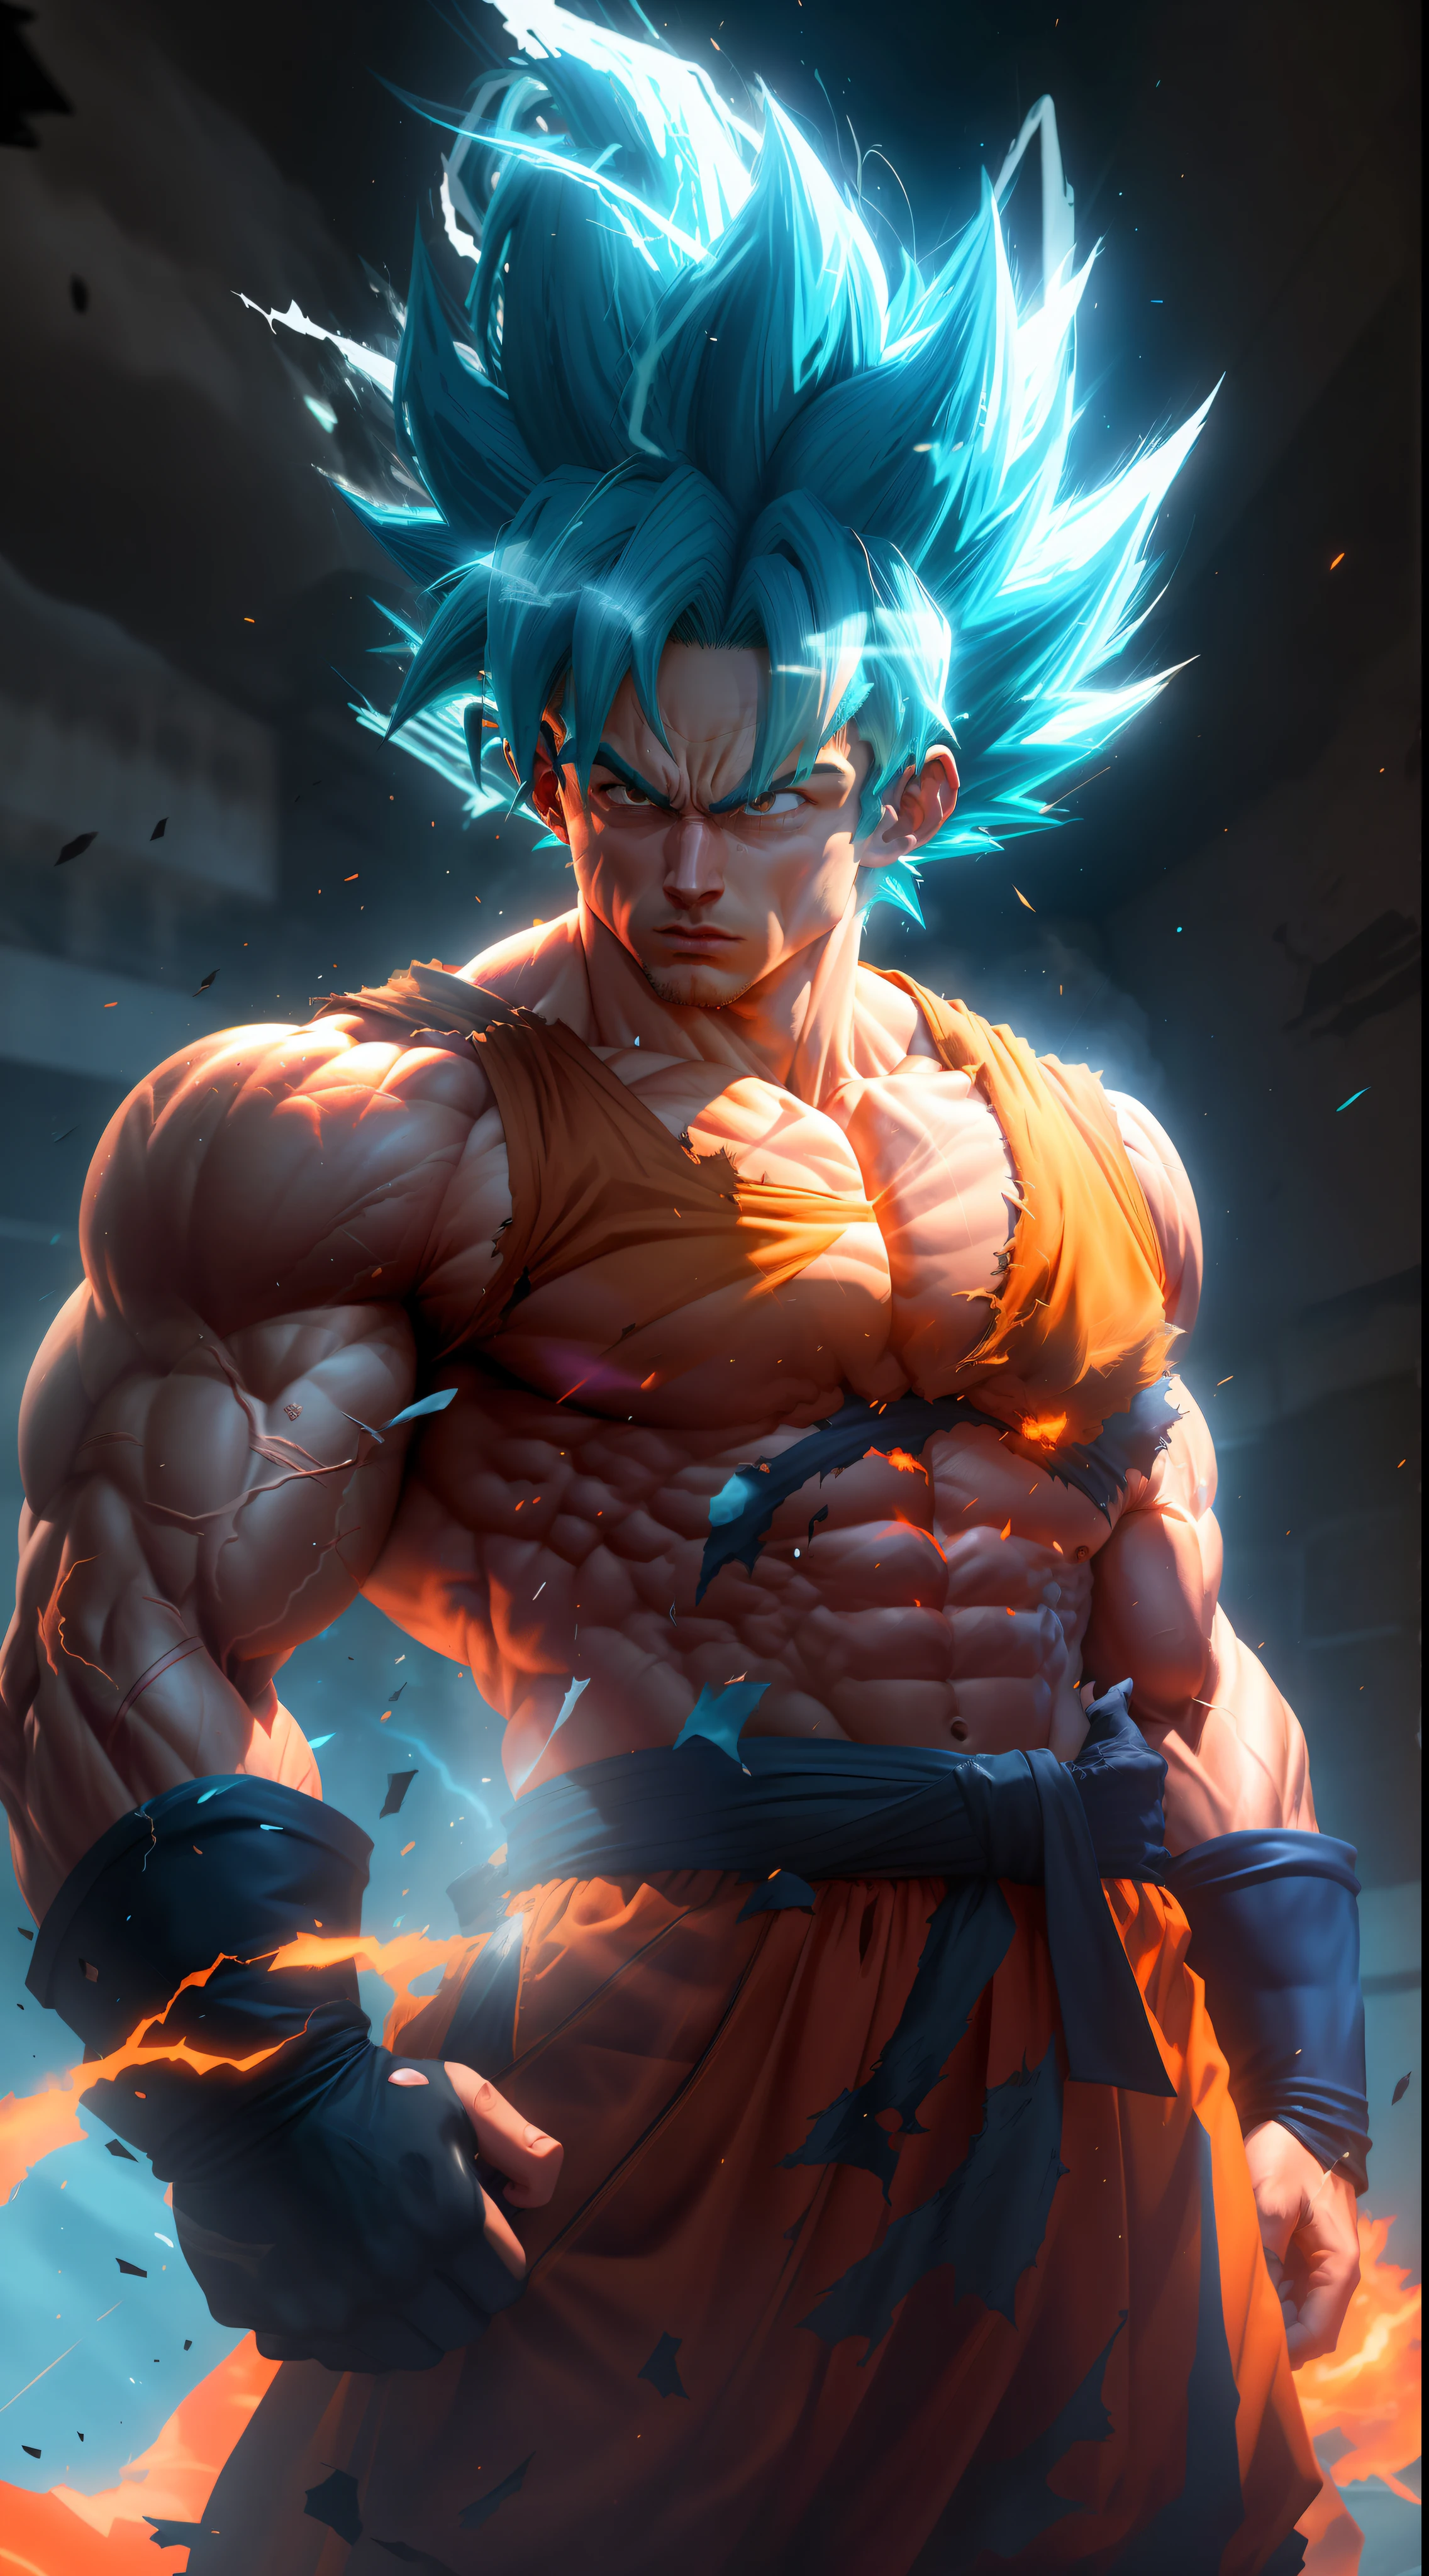 Goku super saiyan, hombre adulto con cabello azul neón extremadamente musculoso, músculos definidos llenos de venas, ropa de color naranja oscuro totalmente rota, guantes blancos, cara seria, definición muscular, hombros grandes, bíceps redondeados, Motor irreal 5.8k.